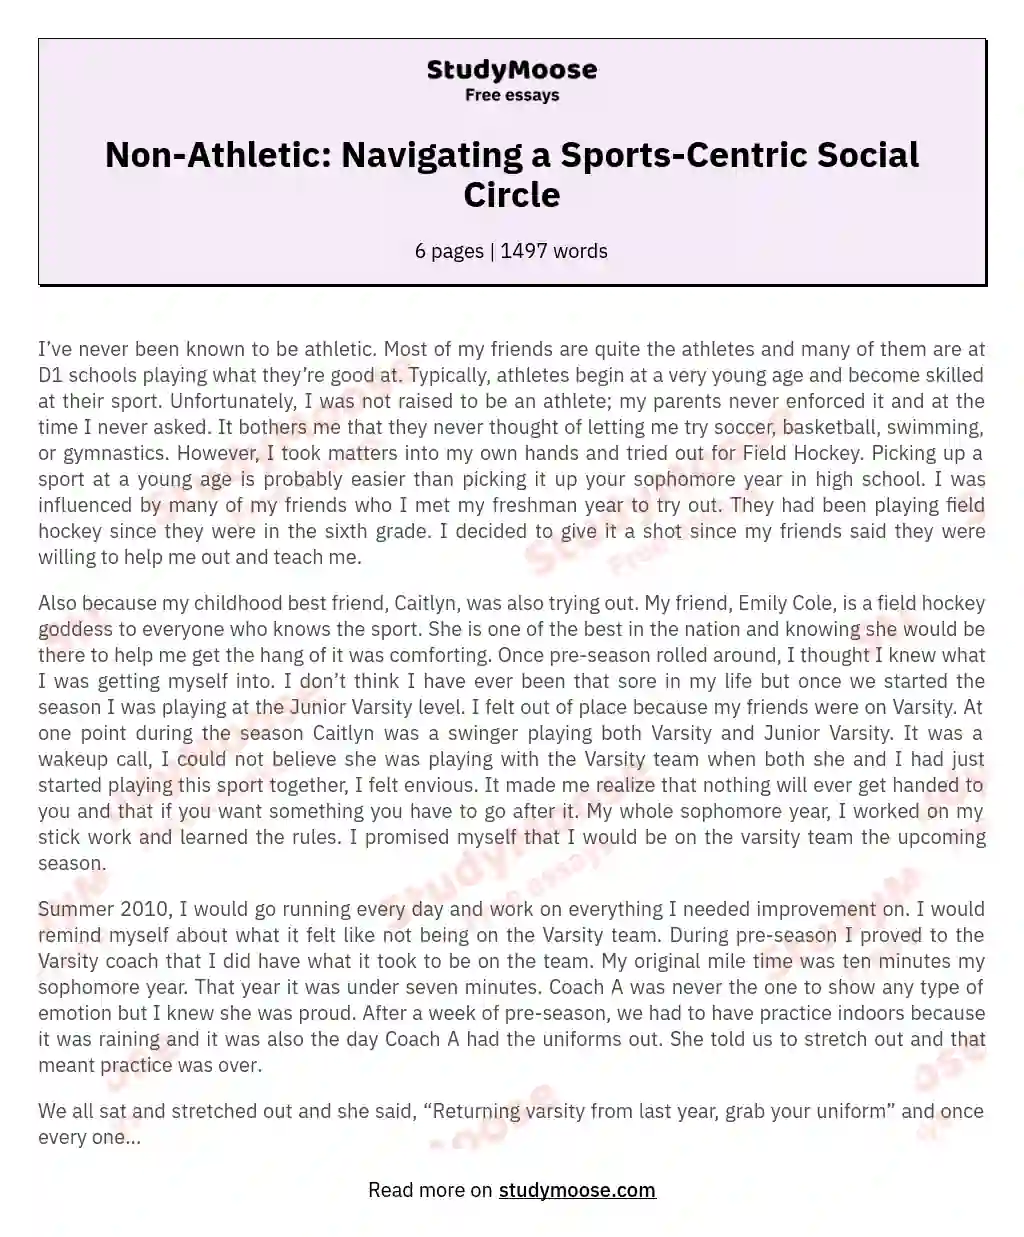 Non-Athletic: Navigating a Sports-Centric Social Circle